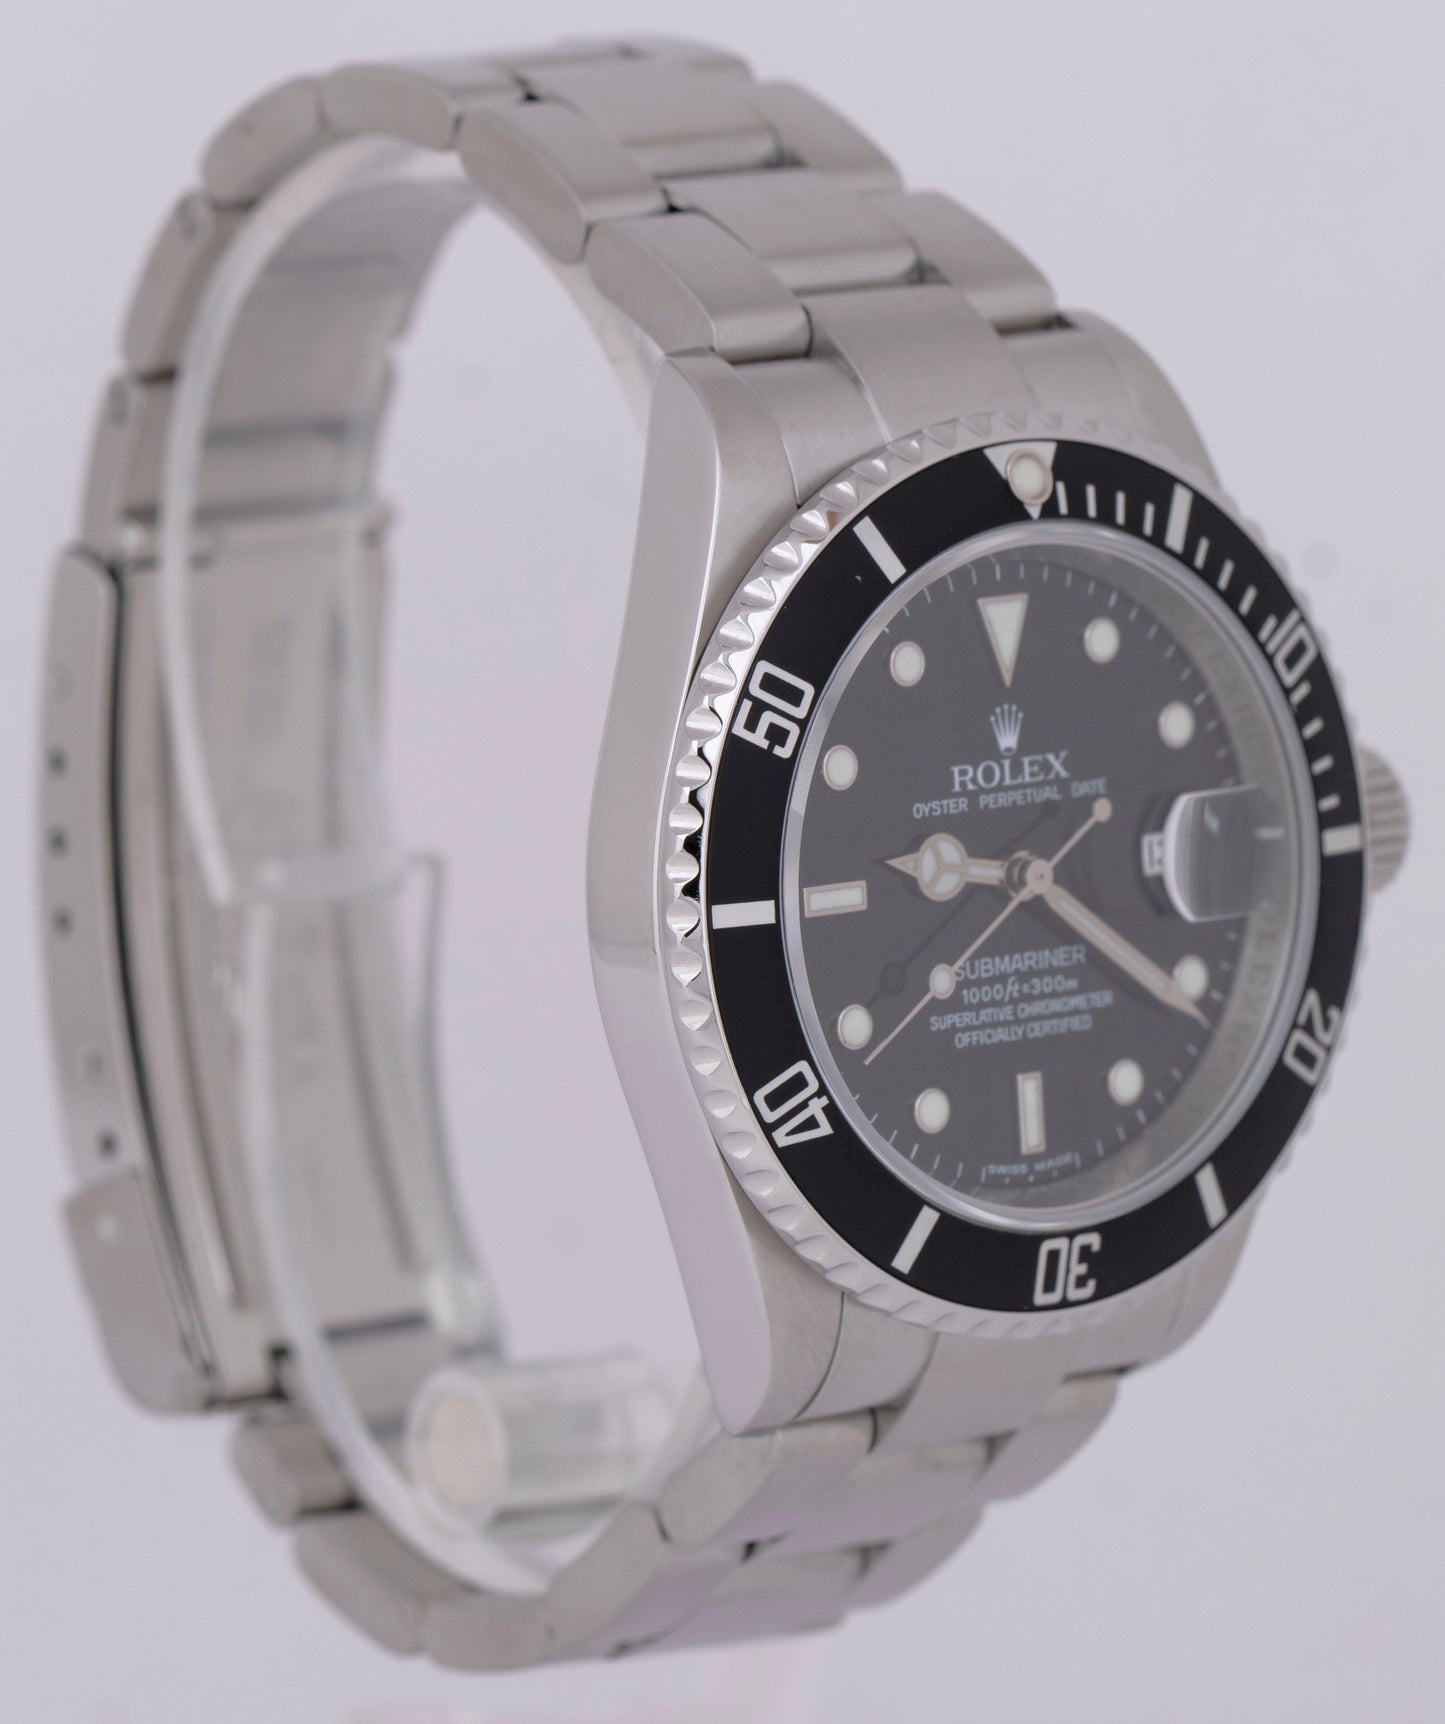 MINT Rolex Submariner Date Black REHAUT Stainless Steel 40mm Oyster 16610 Watch